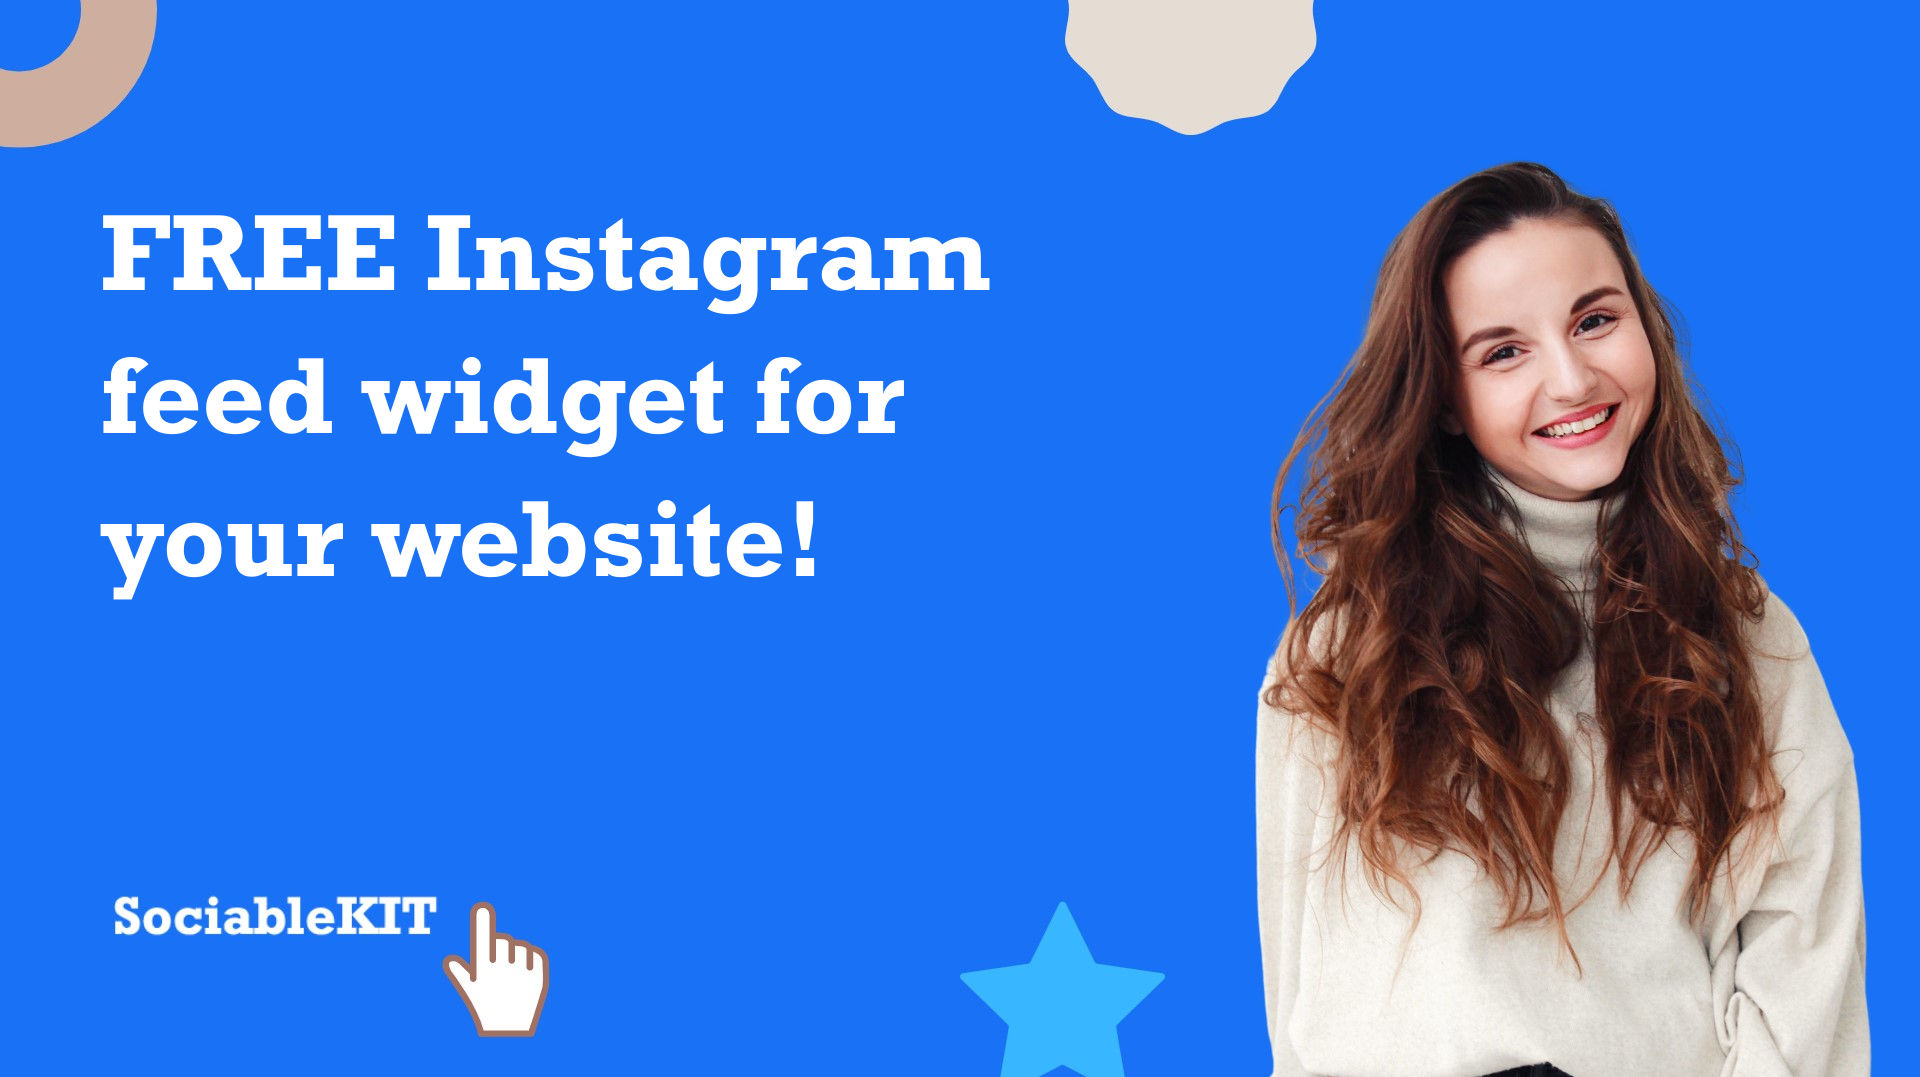 Free Instagram feed widget for your website